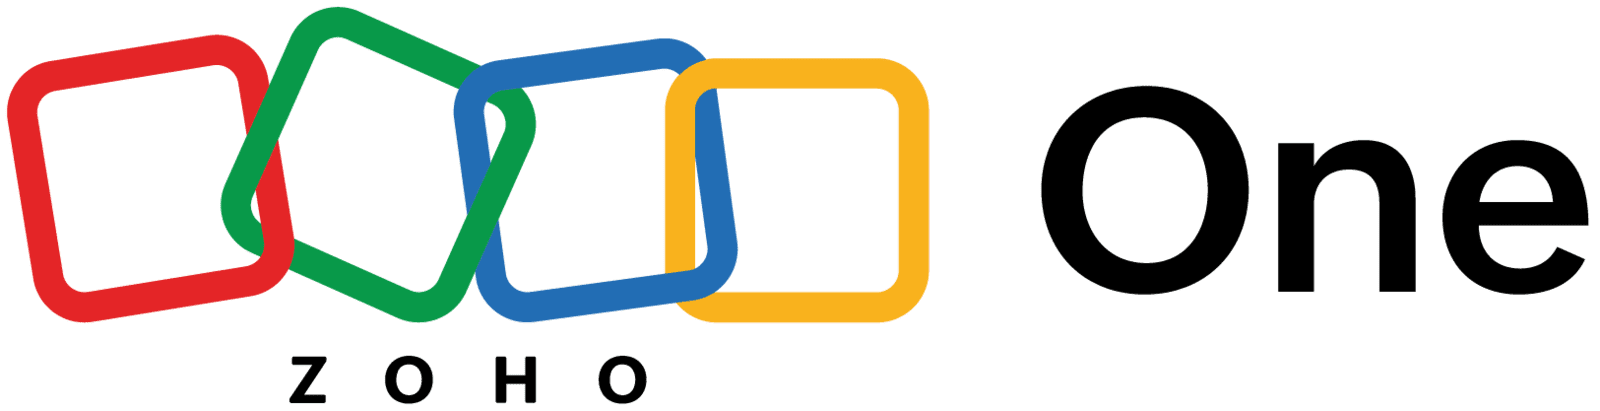 Zoho One Logo